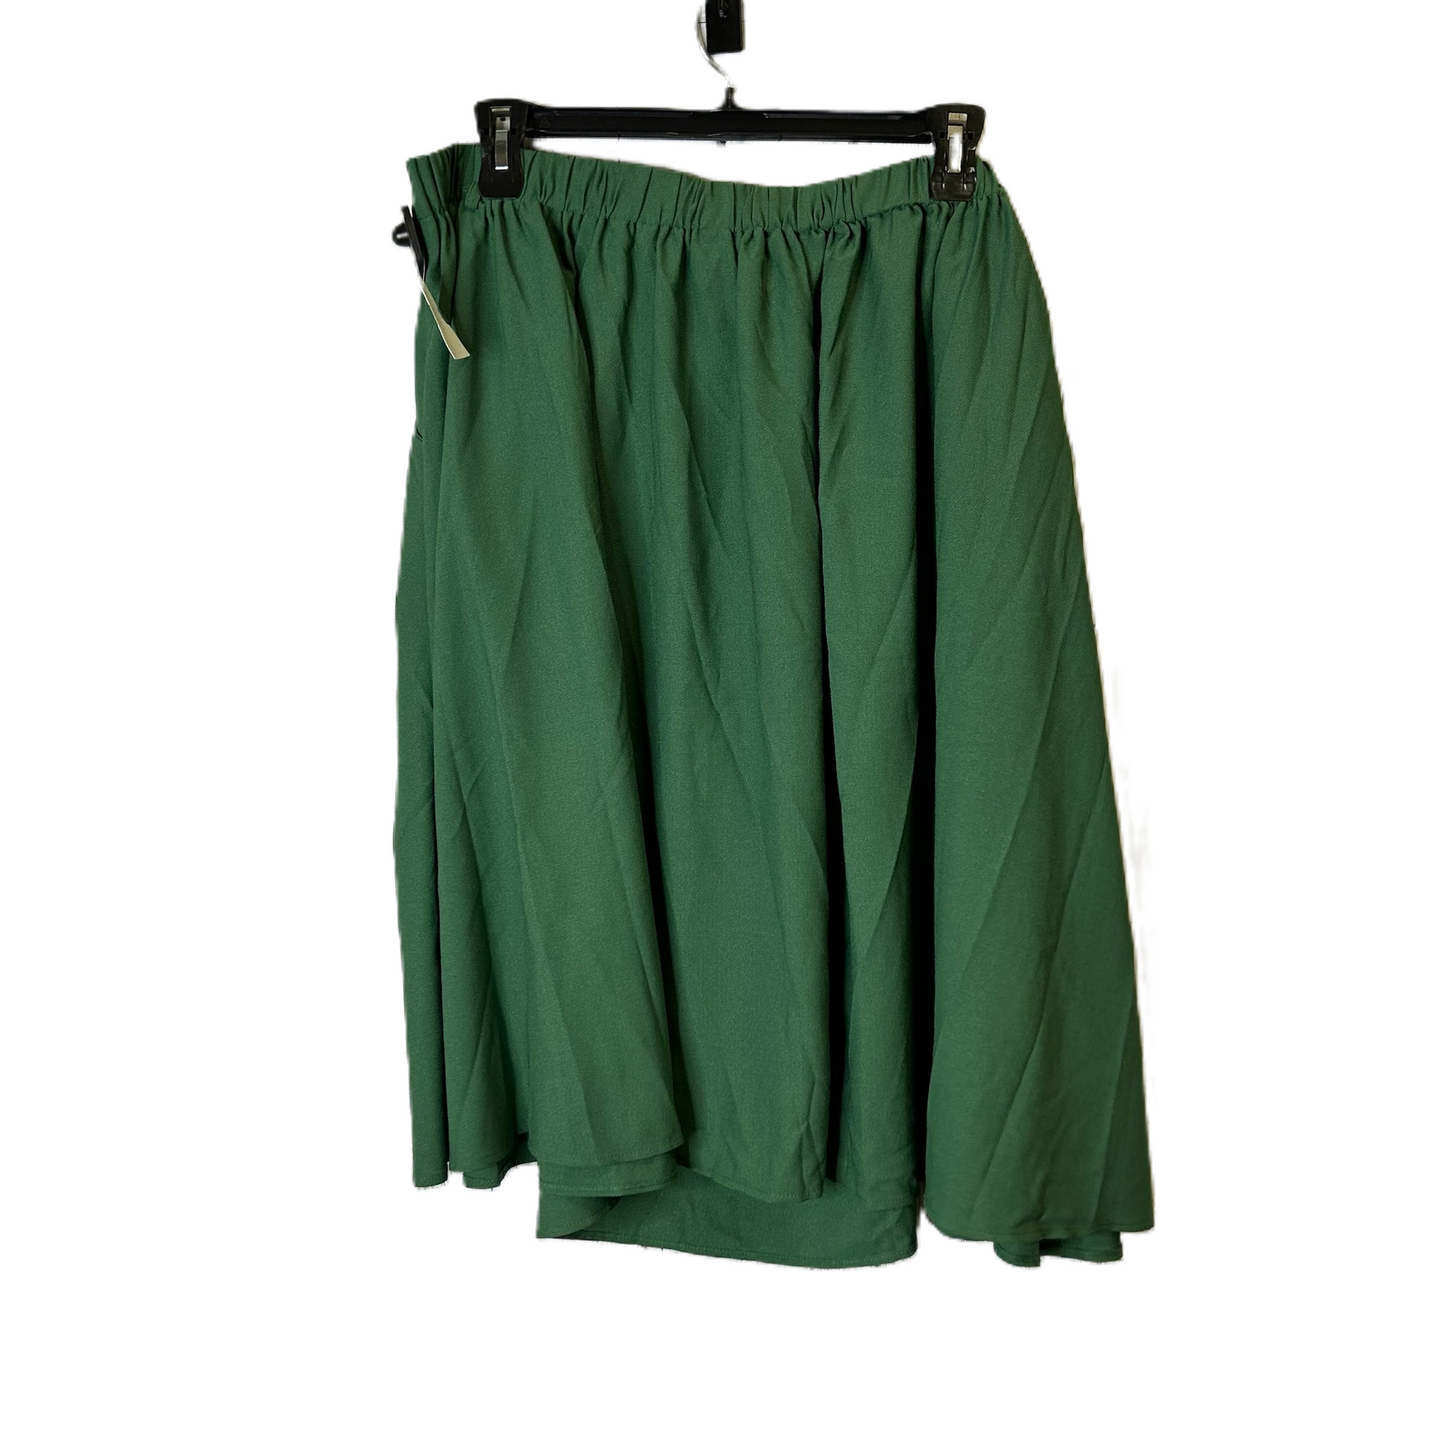 Green Skirt Midi By Modcloth, Size: 4x